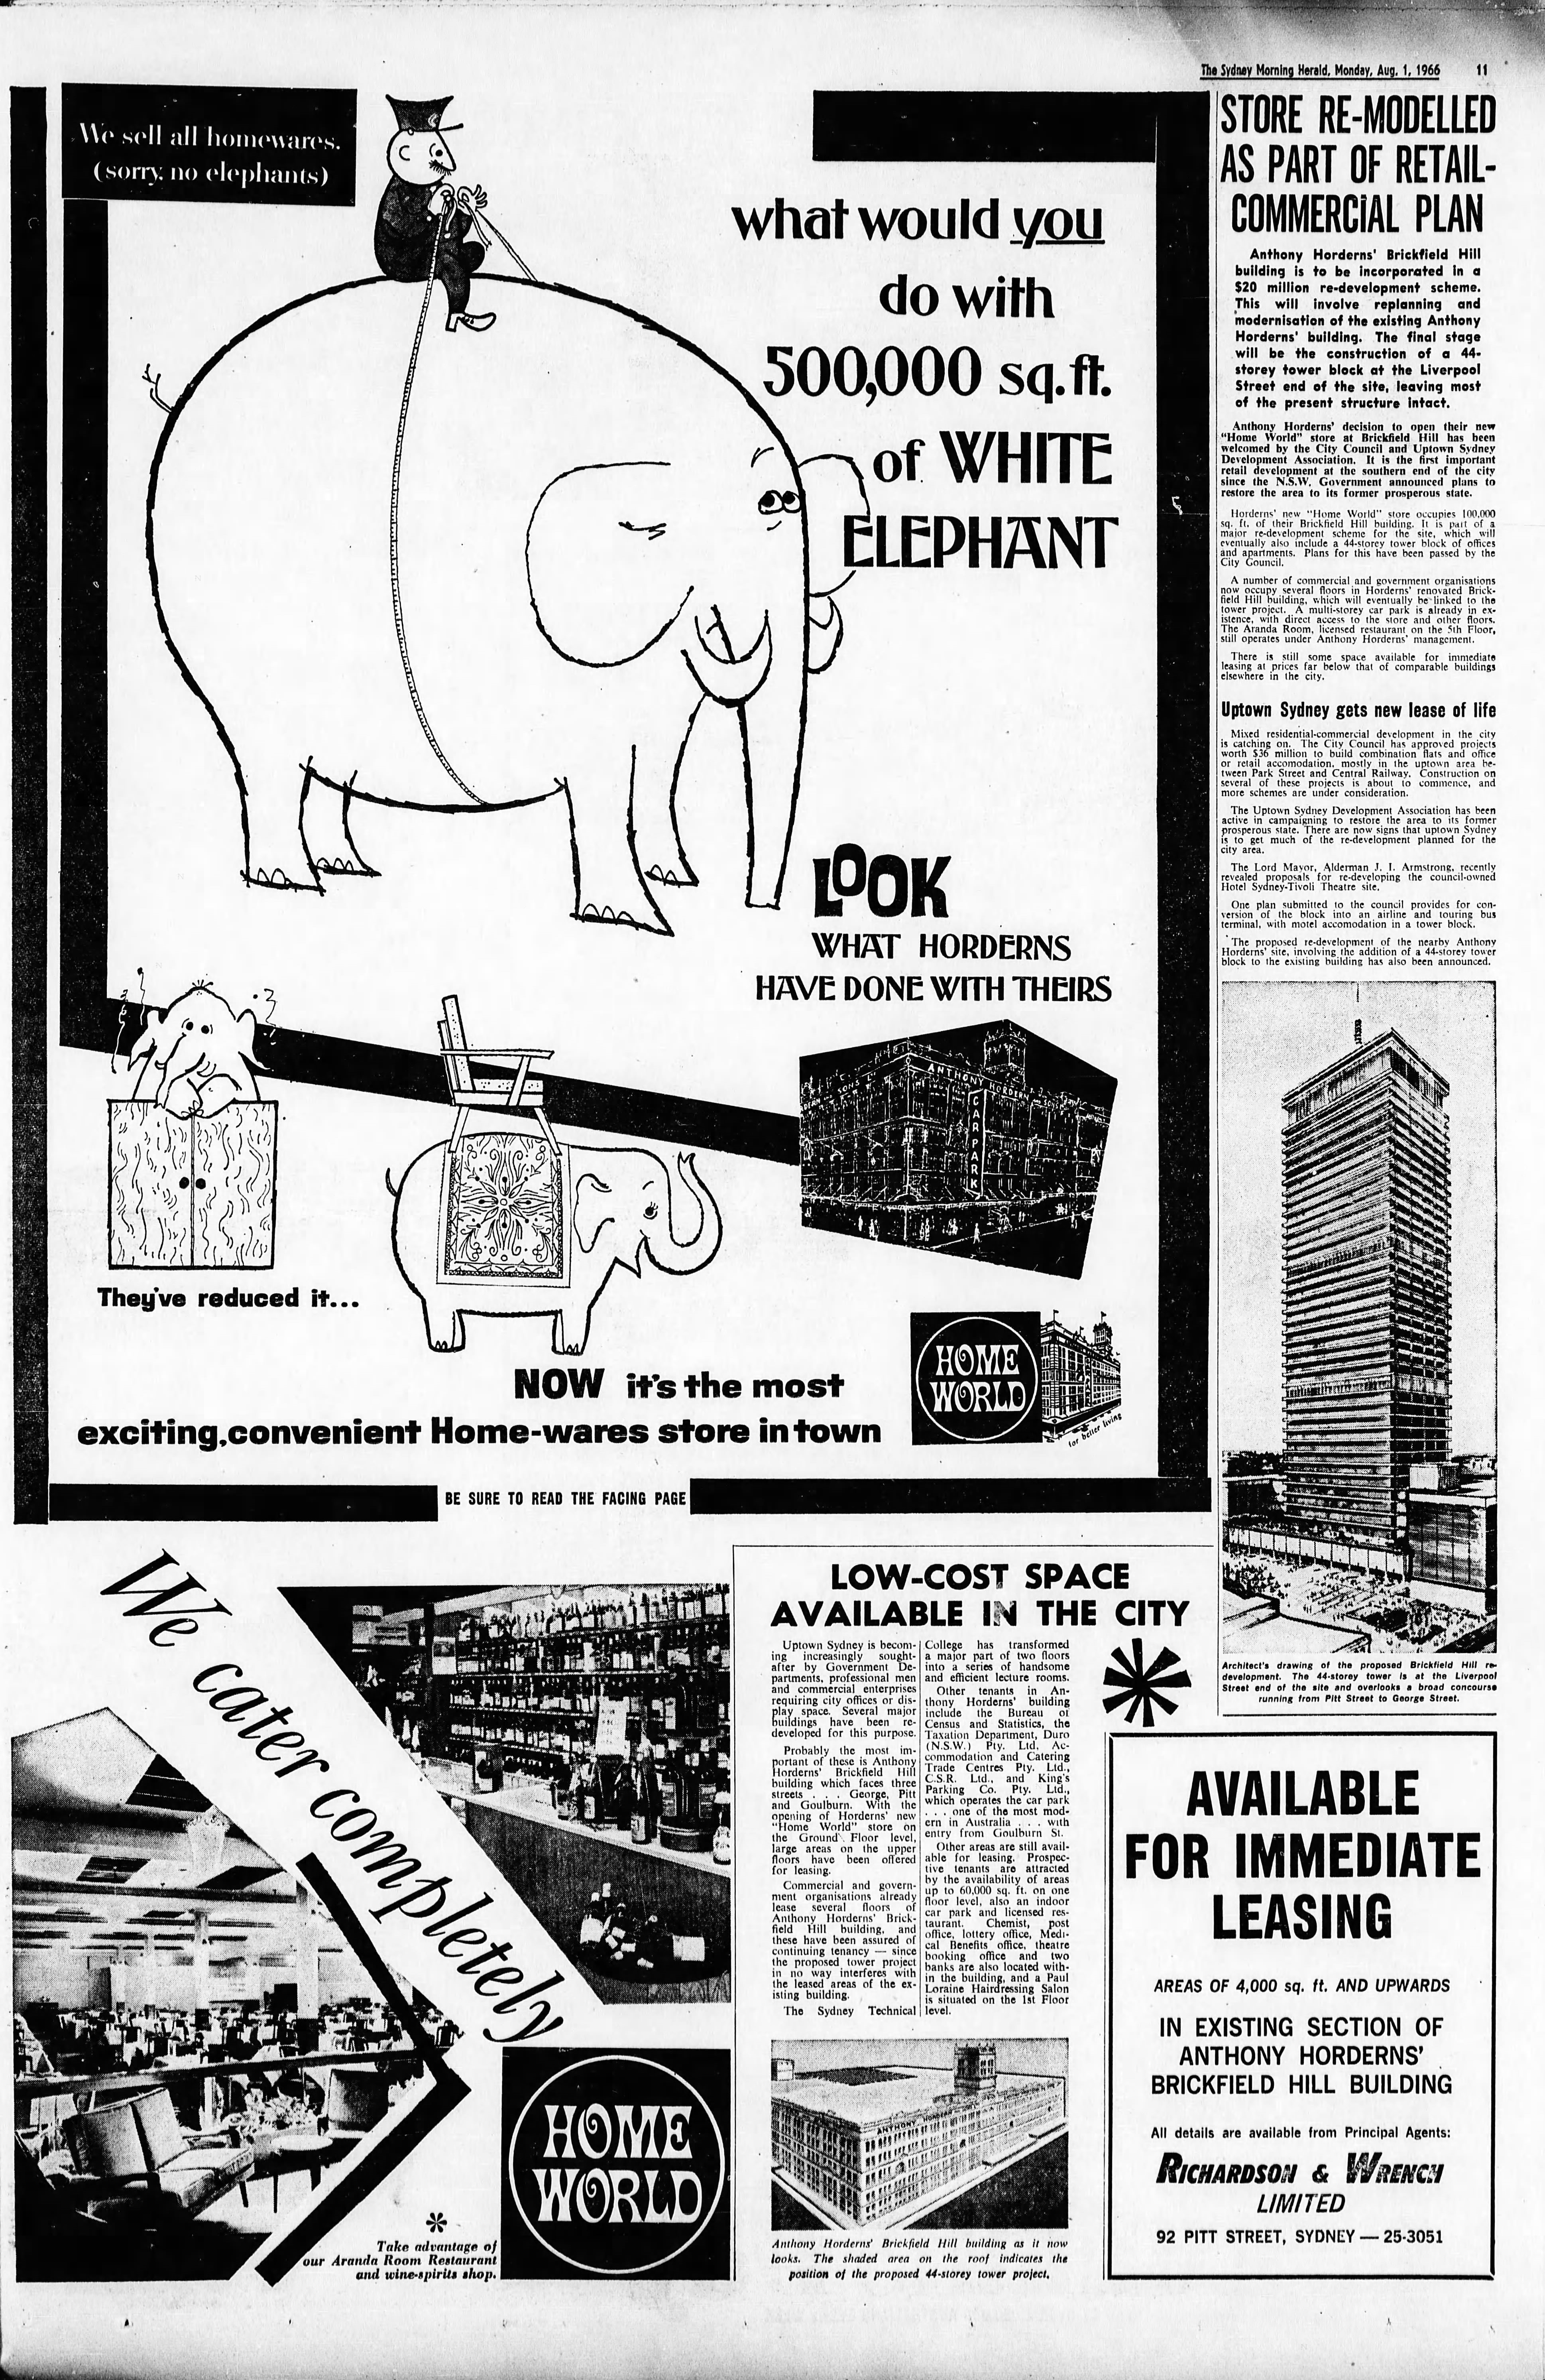 Anthony Horderns Advertisement August 1 1966 SMH  (2)